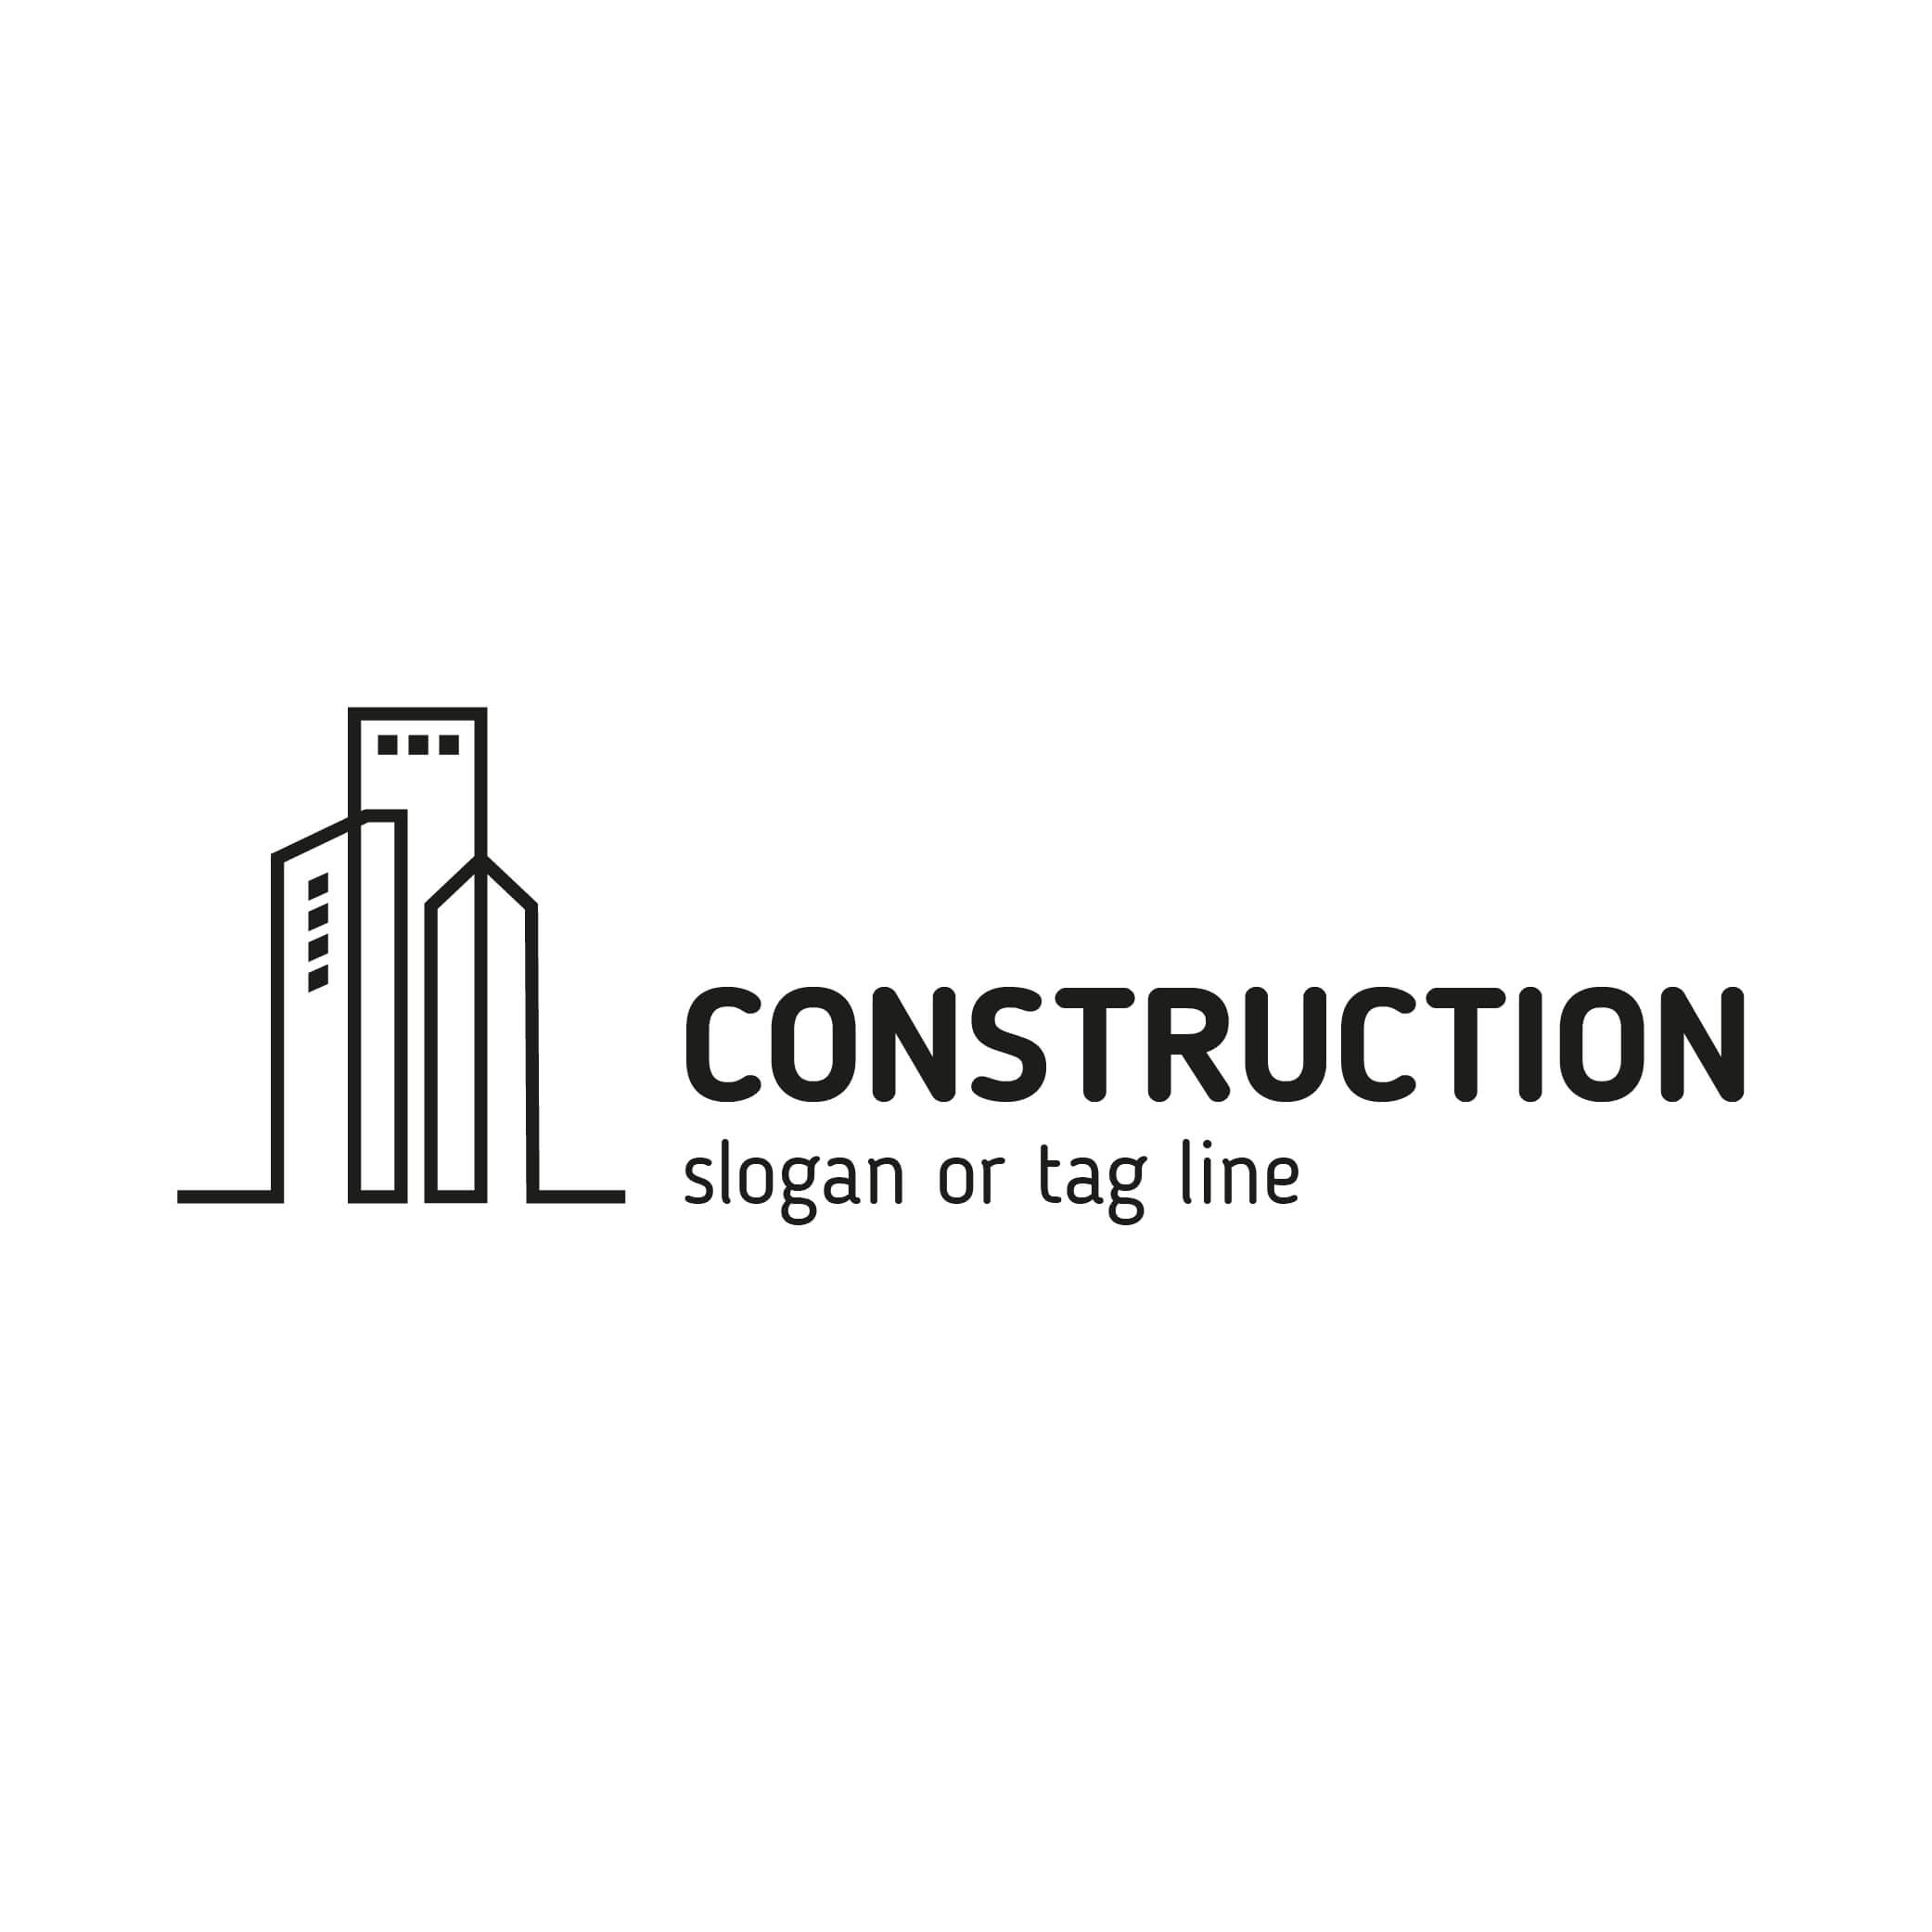 Black and White Company Logo - Construction Real Estate company logo templates Vector